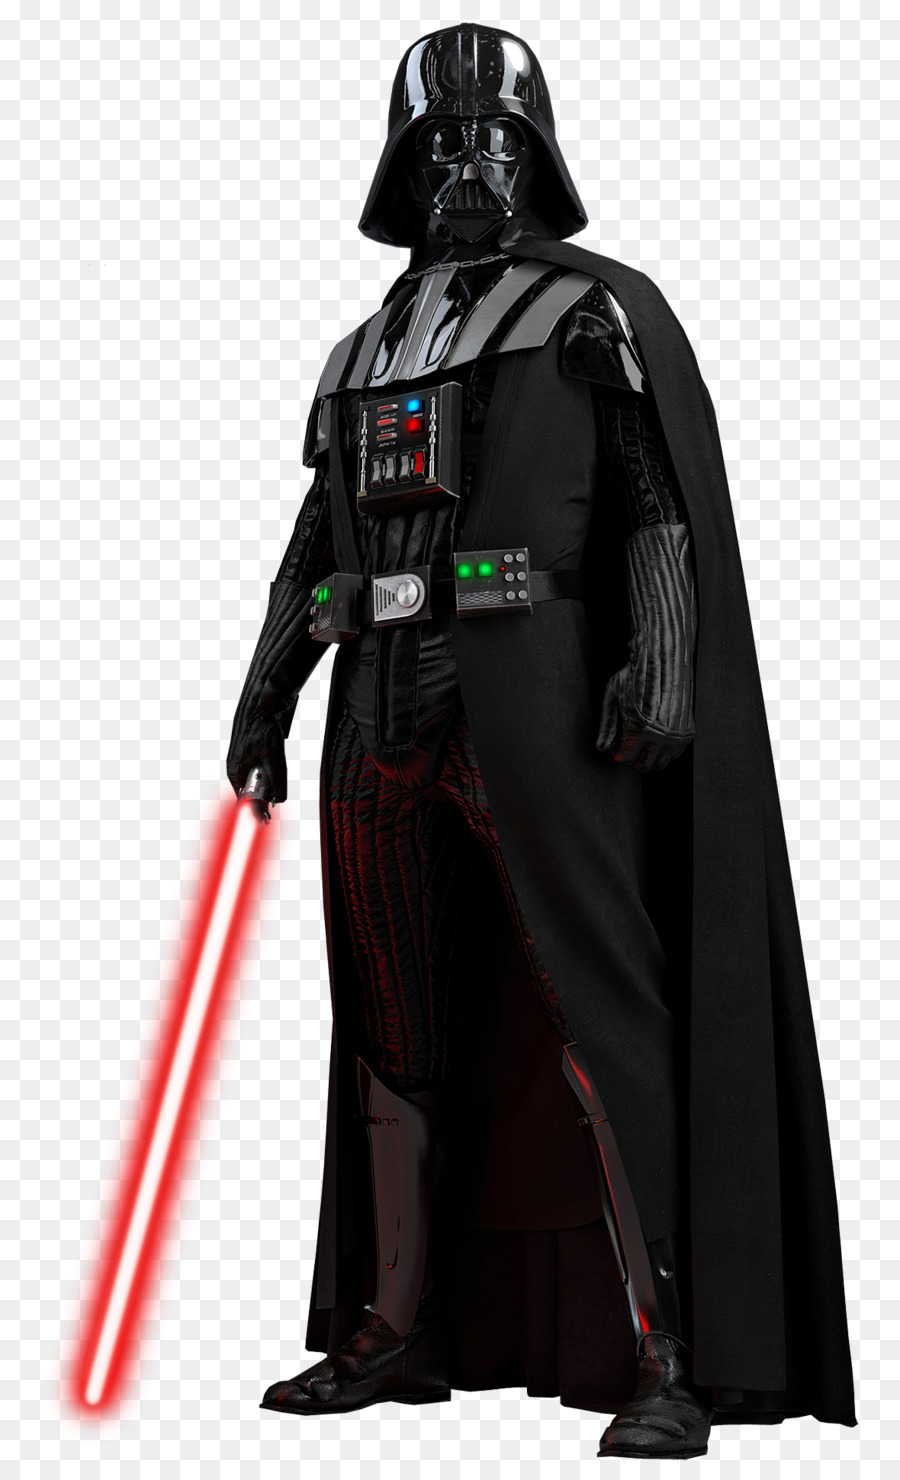 Anakin Skywalker Luke Skywalker Star Wars: Darth Vader and the Lost Command Darth Maul Palpatine - stormtrooper png download - 1180*1920 - Free Transparent Anakin Skywalker png Download.